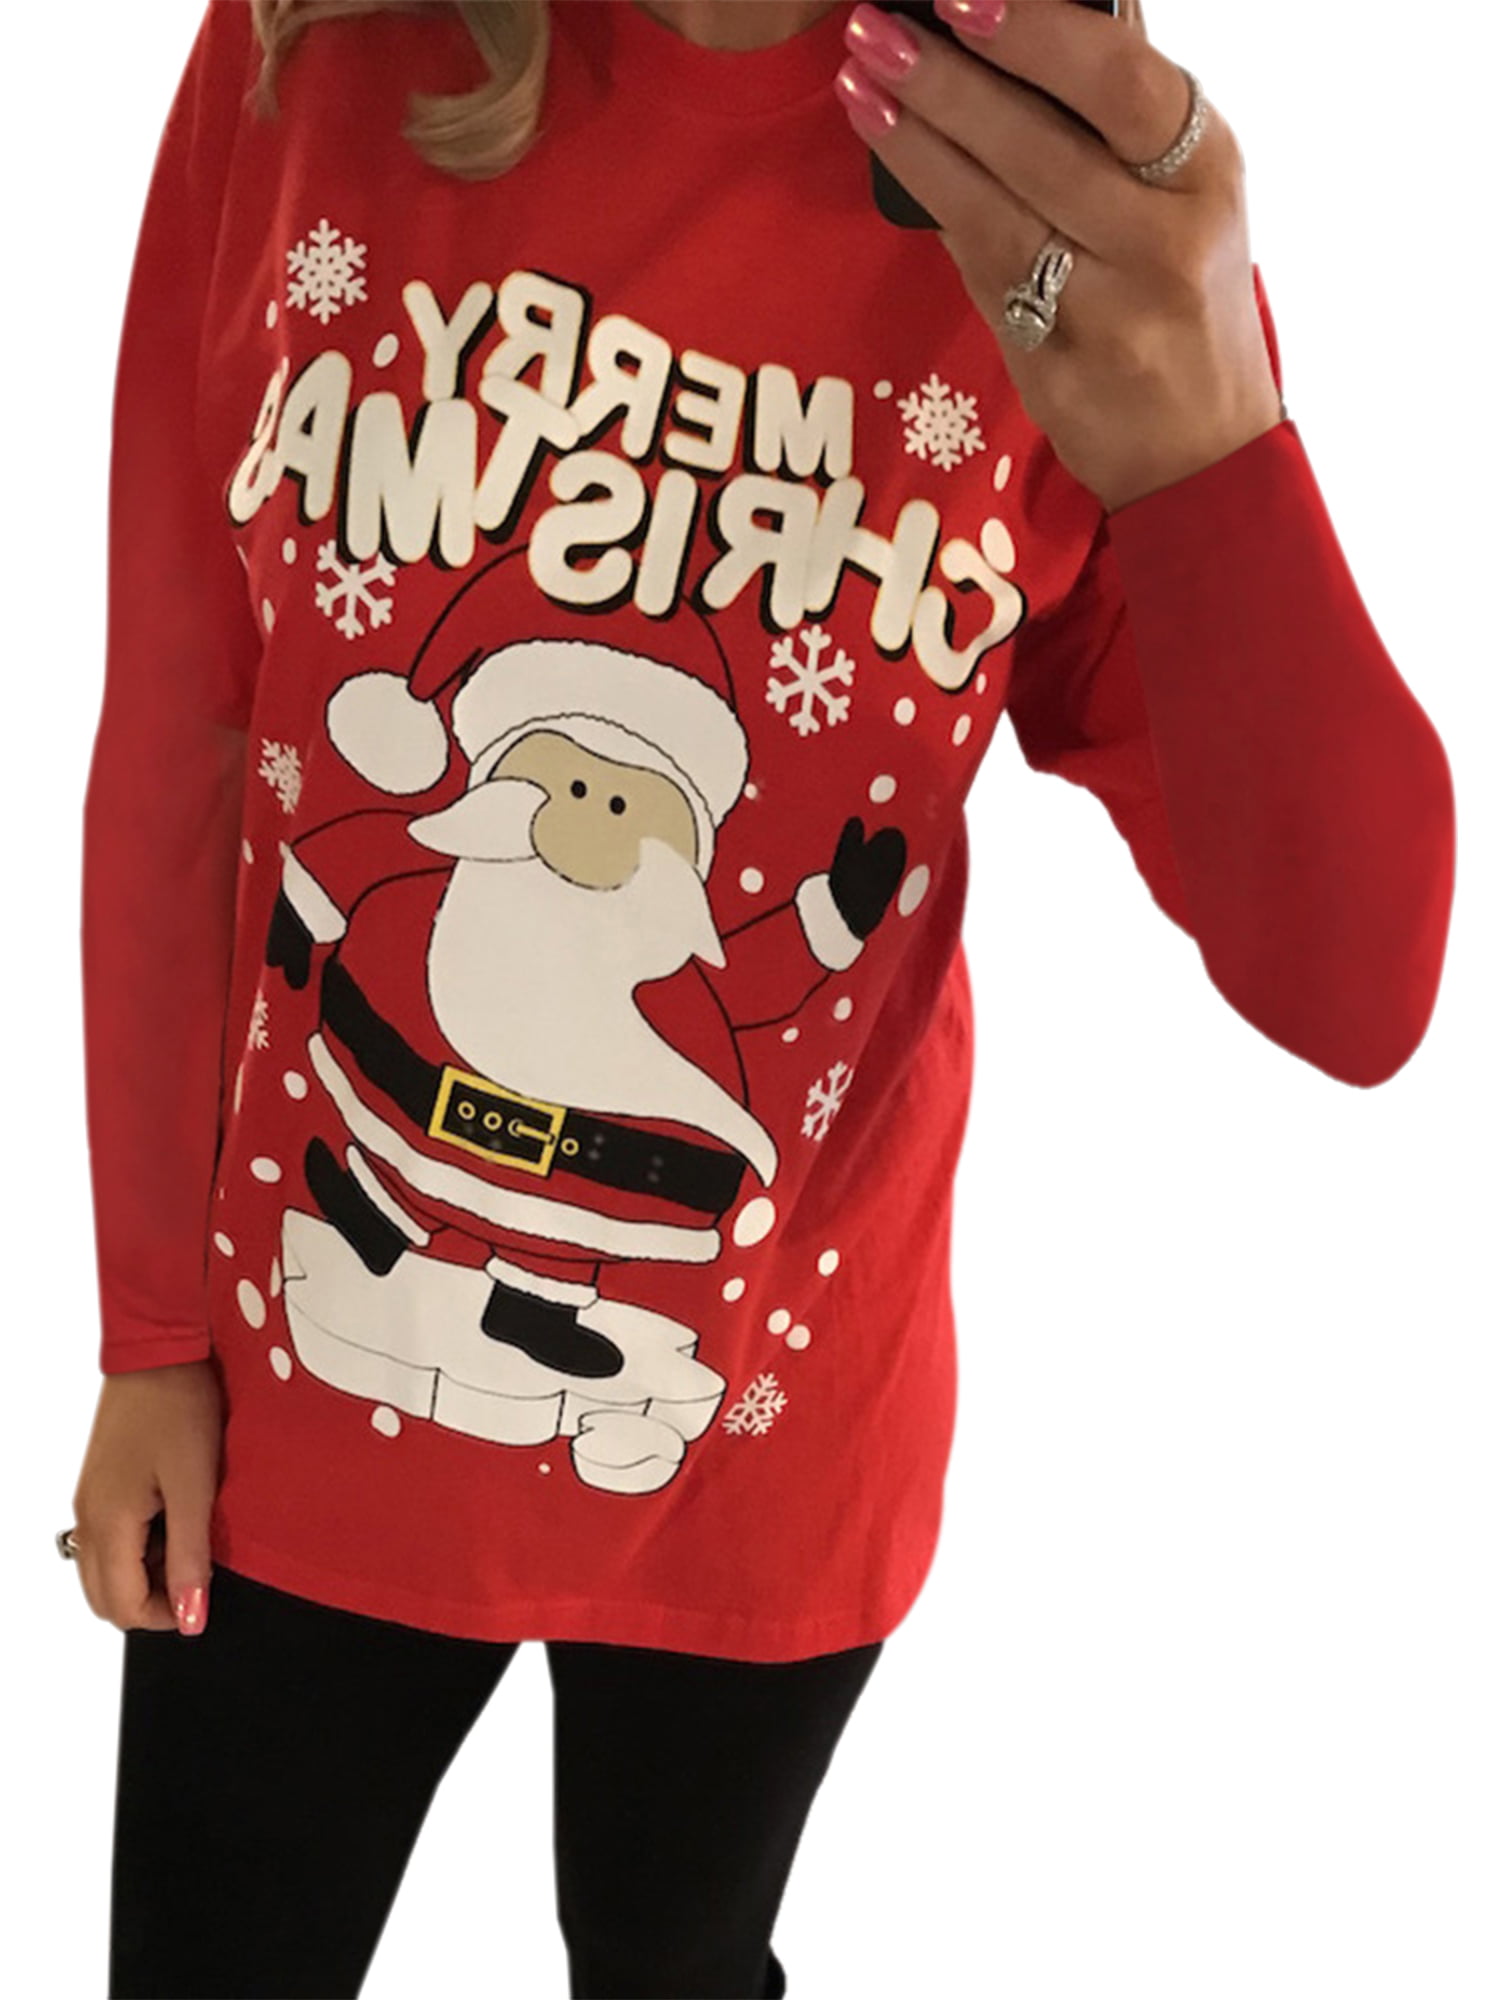 Vintage Sweatshirt for Women Long Sleeve Crewneck Shirts Casual Pullover Fashion Print Christmas Blouse Tops